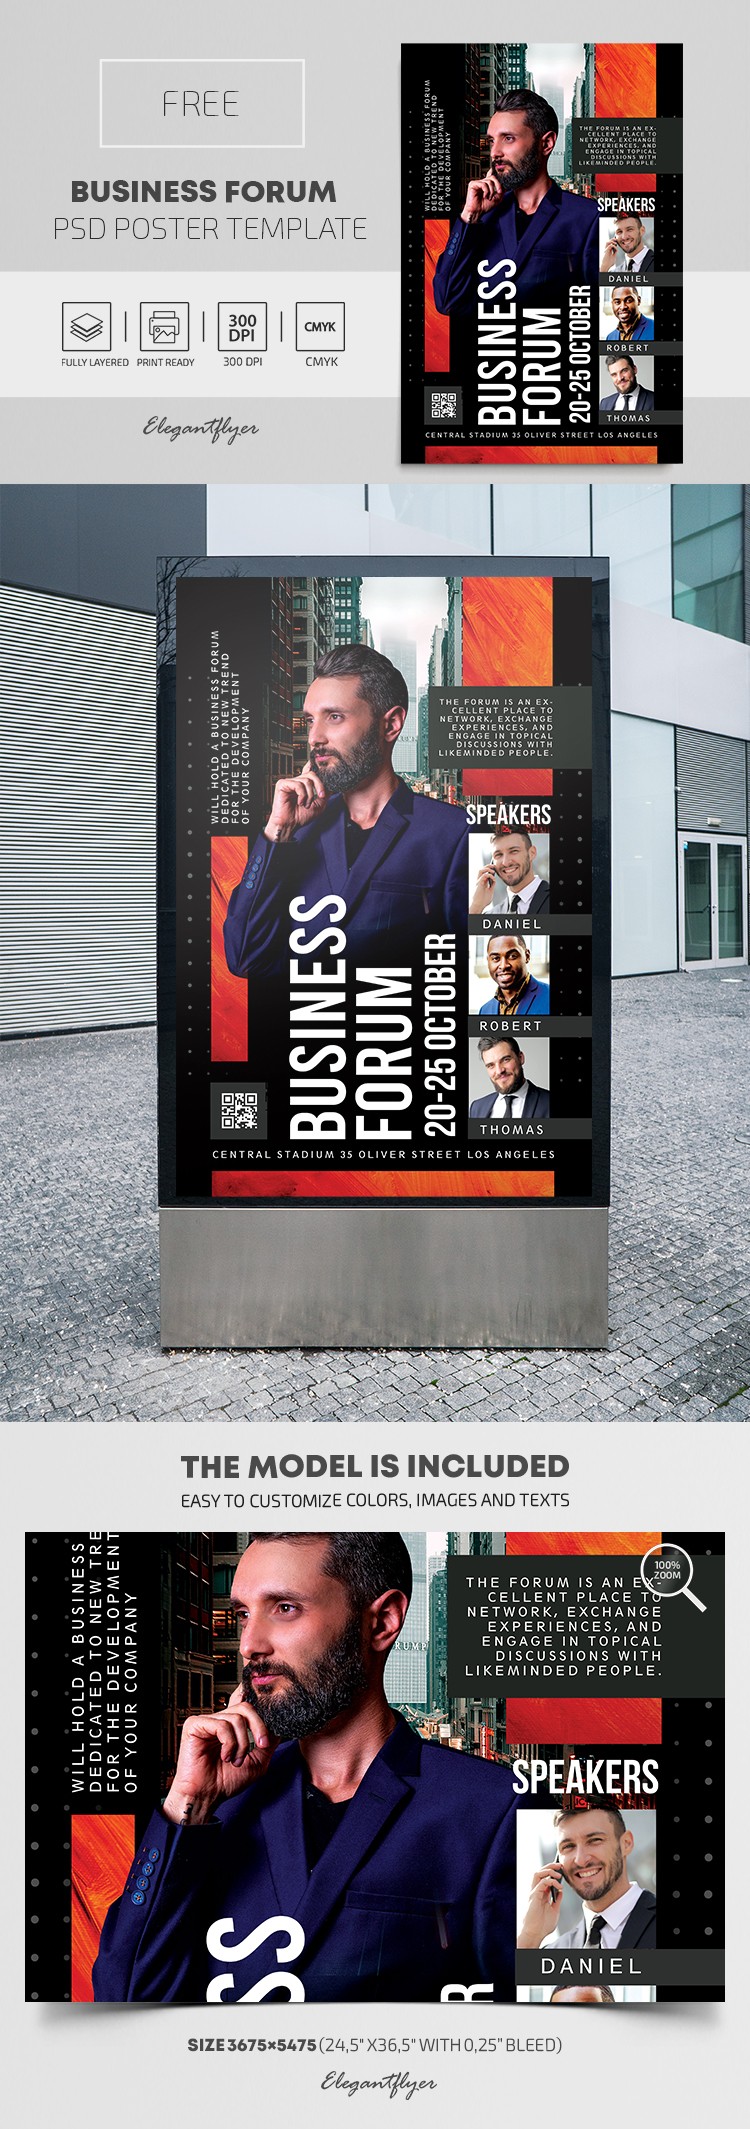 Business Forum Poster by ElegantFlyer